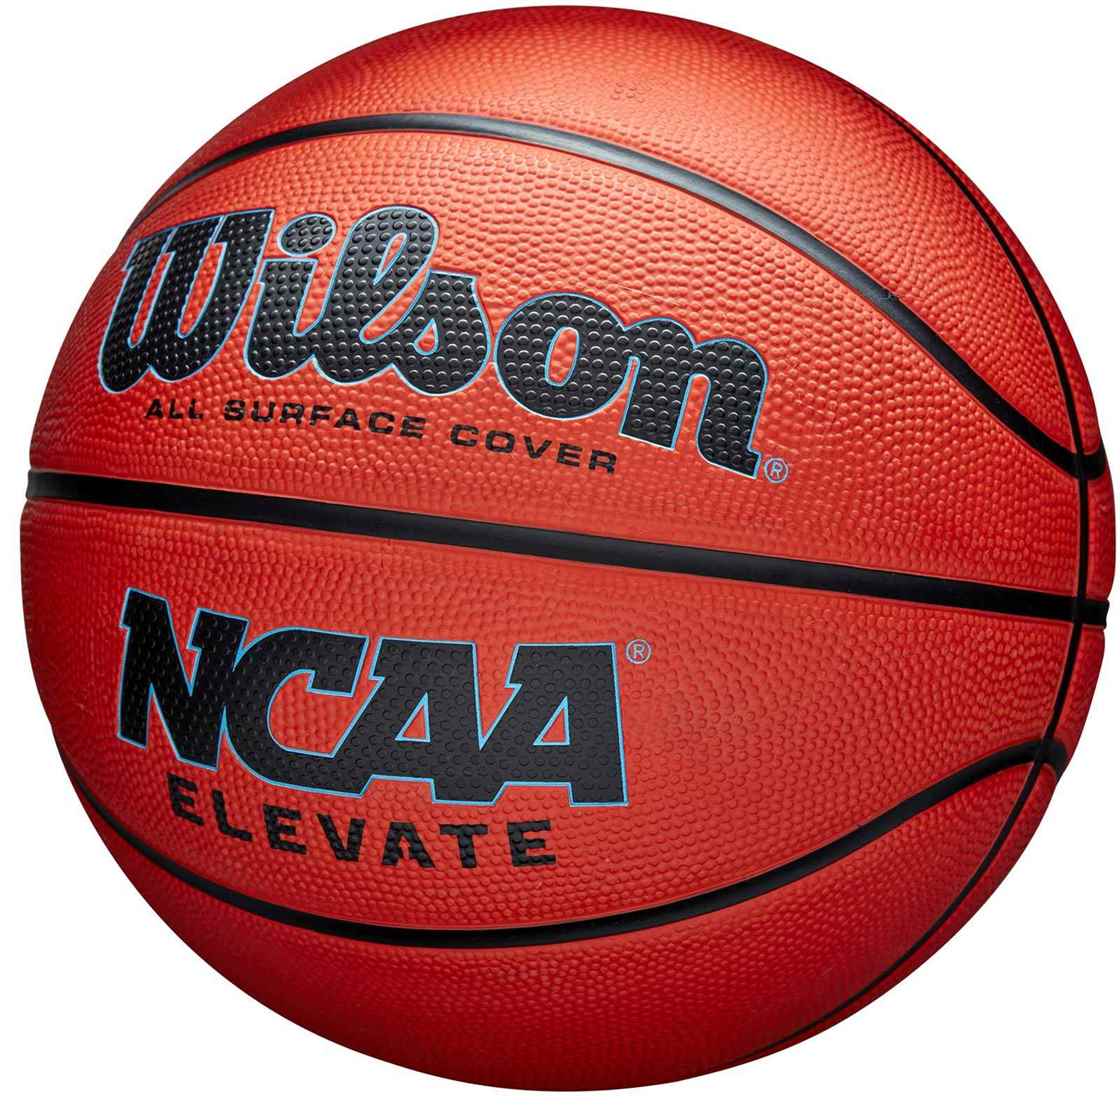 Wilson NCAA Elevate Basketball - Size 7